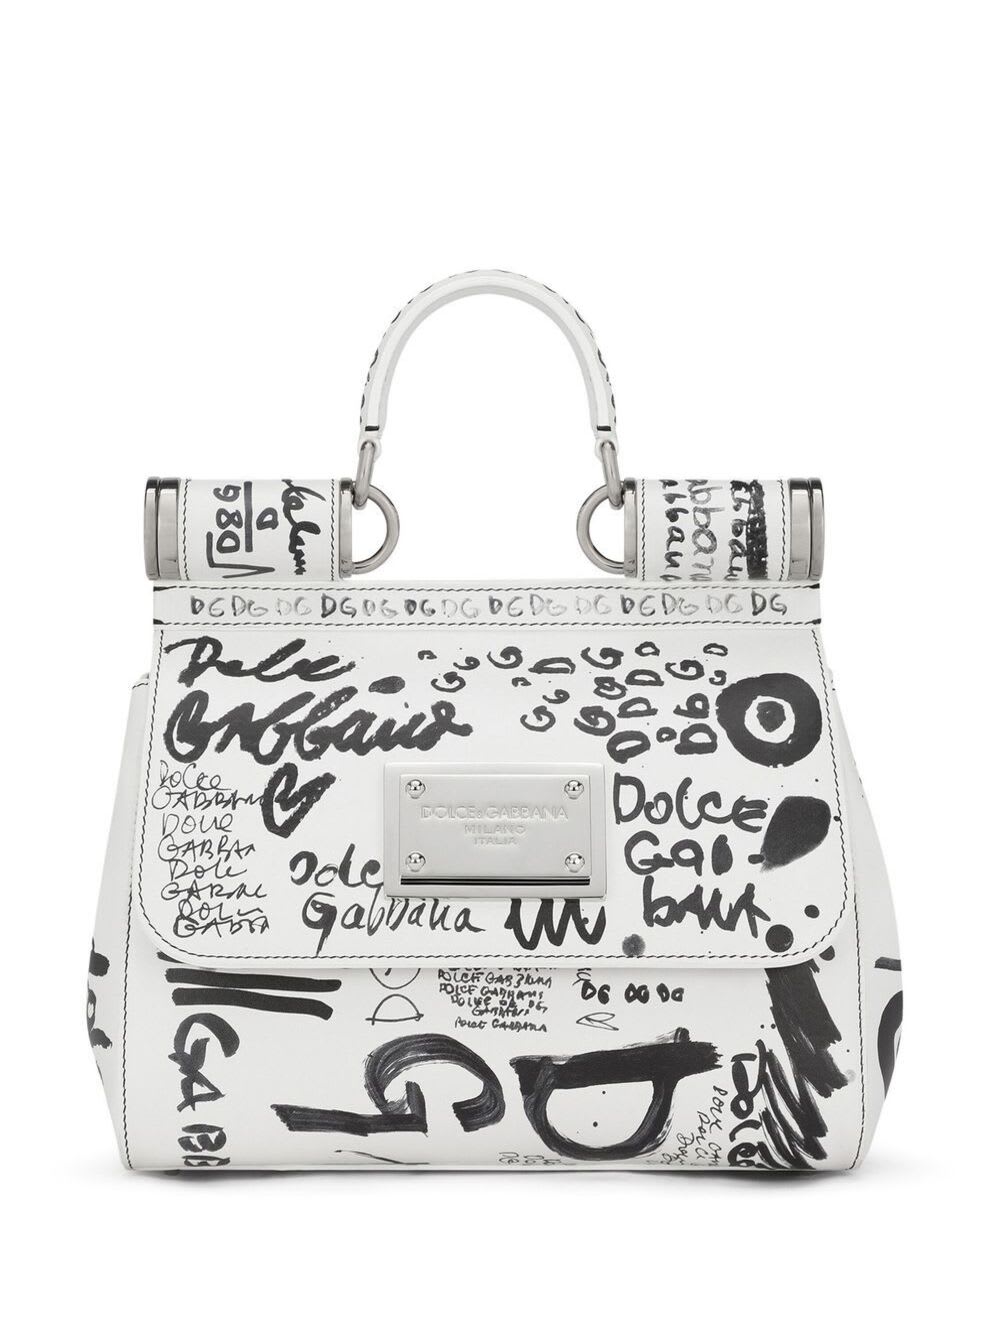 Dolce & Gabbana Graffiti Sicily Handbag